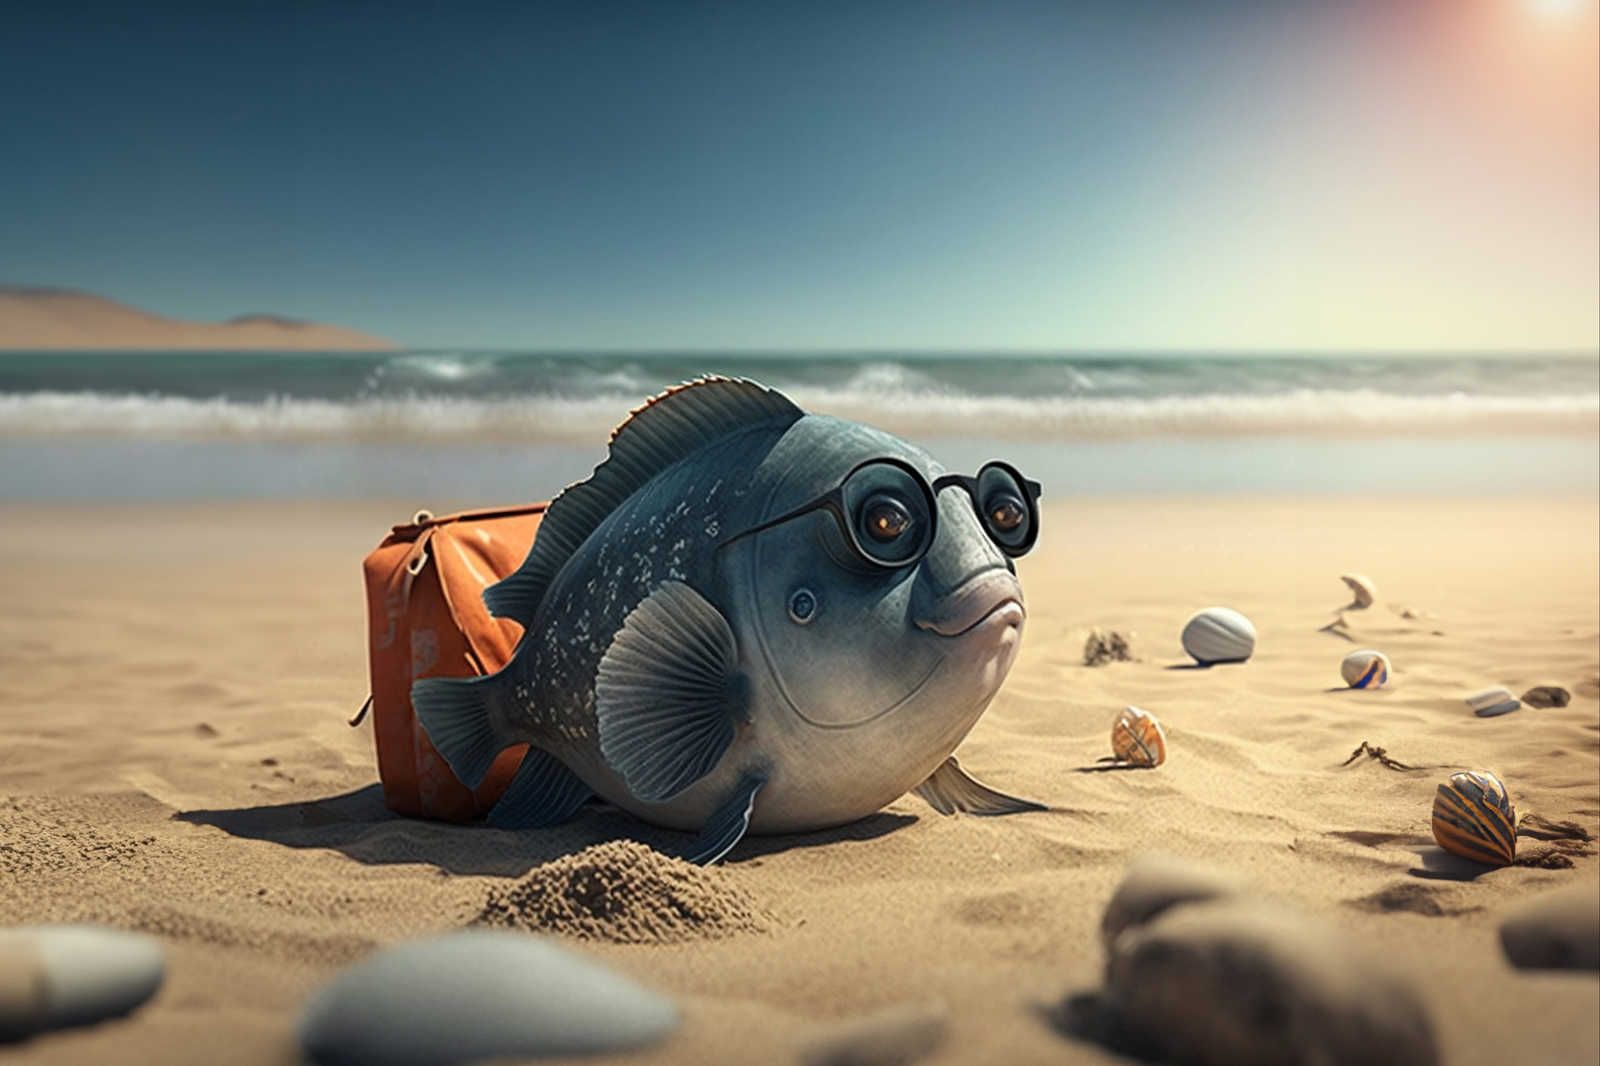             KI-Leinwandbild »Fishy Beachday« – 120 cm x 80 cm
        